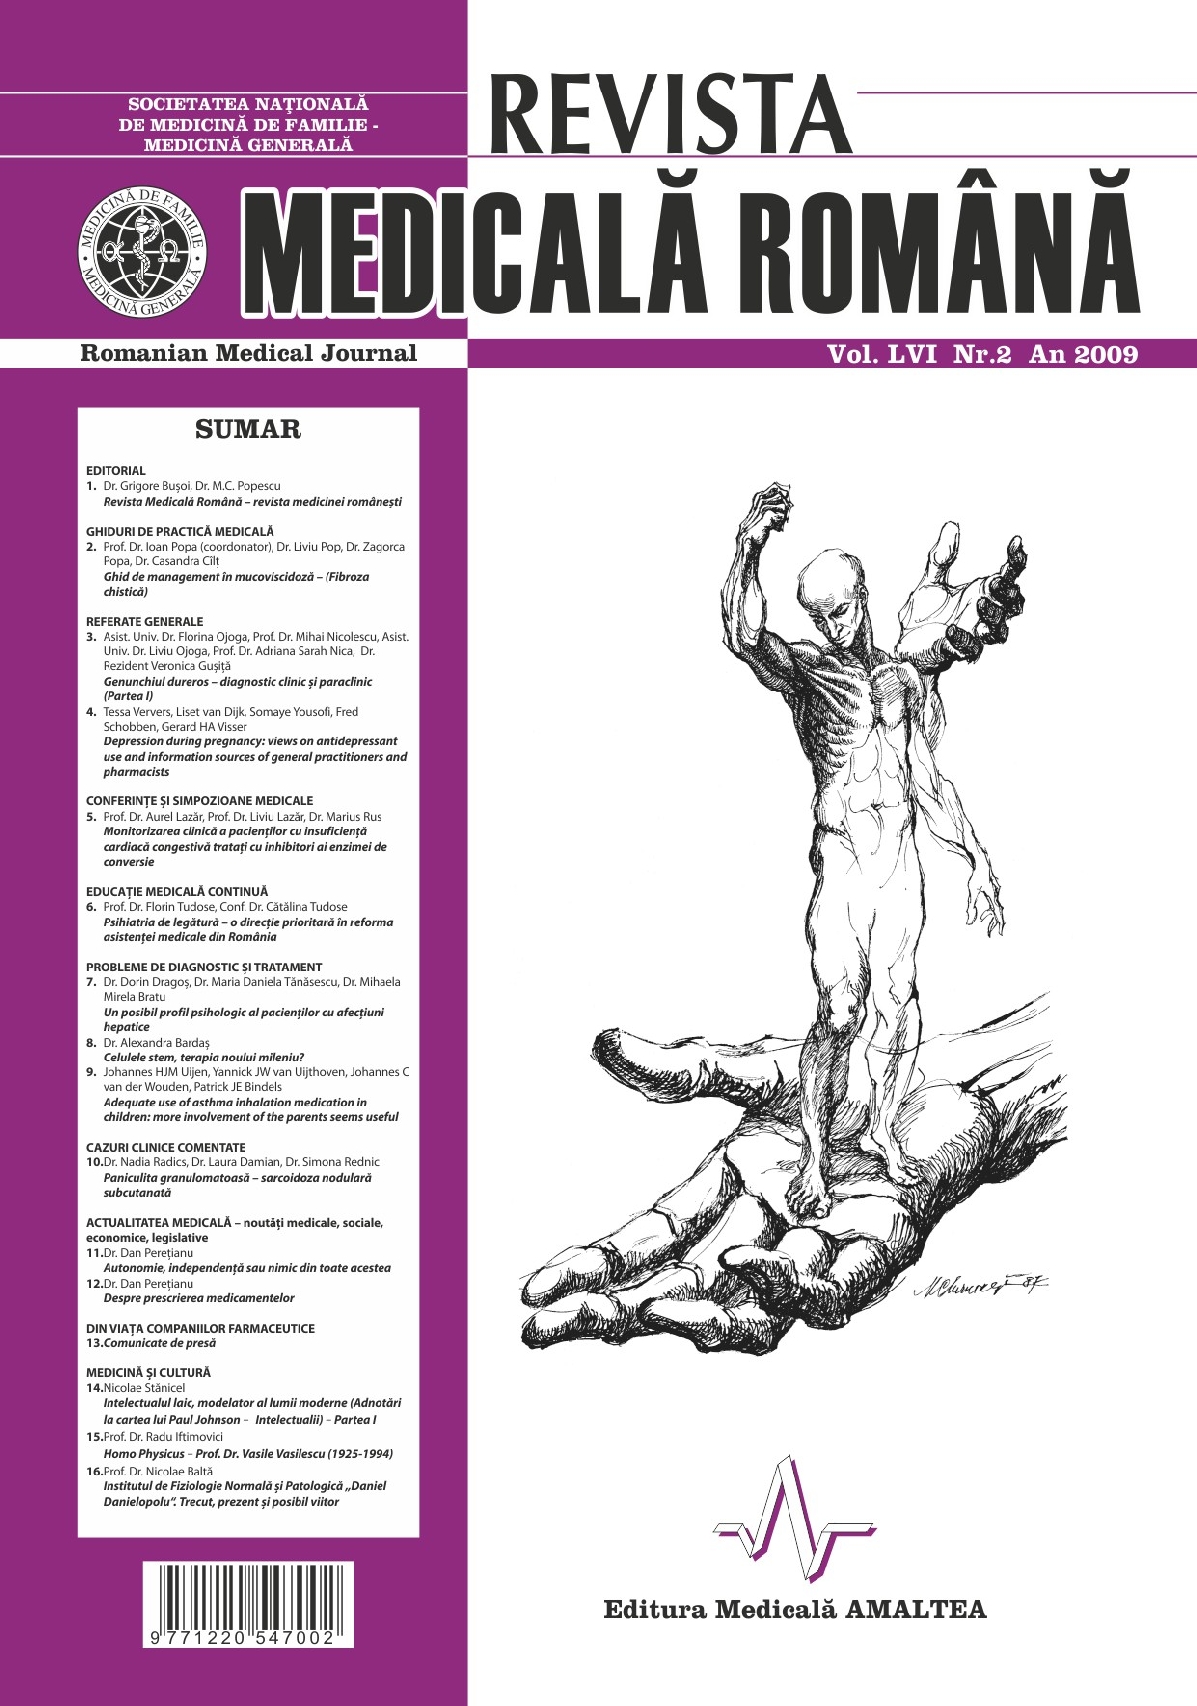 REVISTA MEDICALA ROMANA - Romanian Medical Journal, Vol. LVI, No. 2, Year 2009